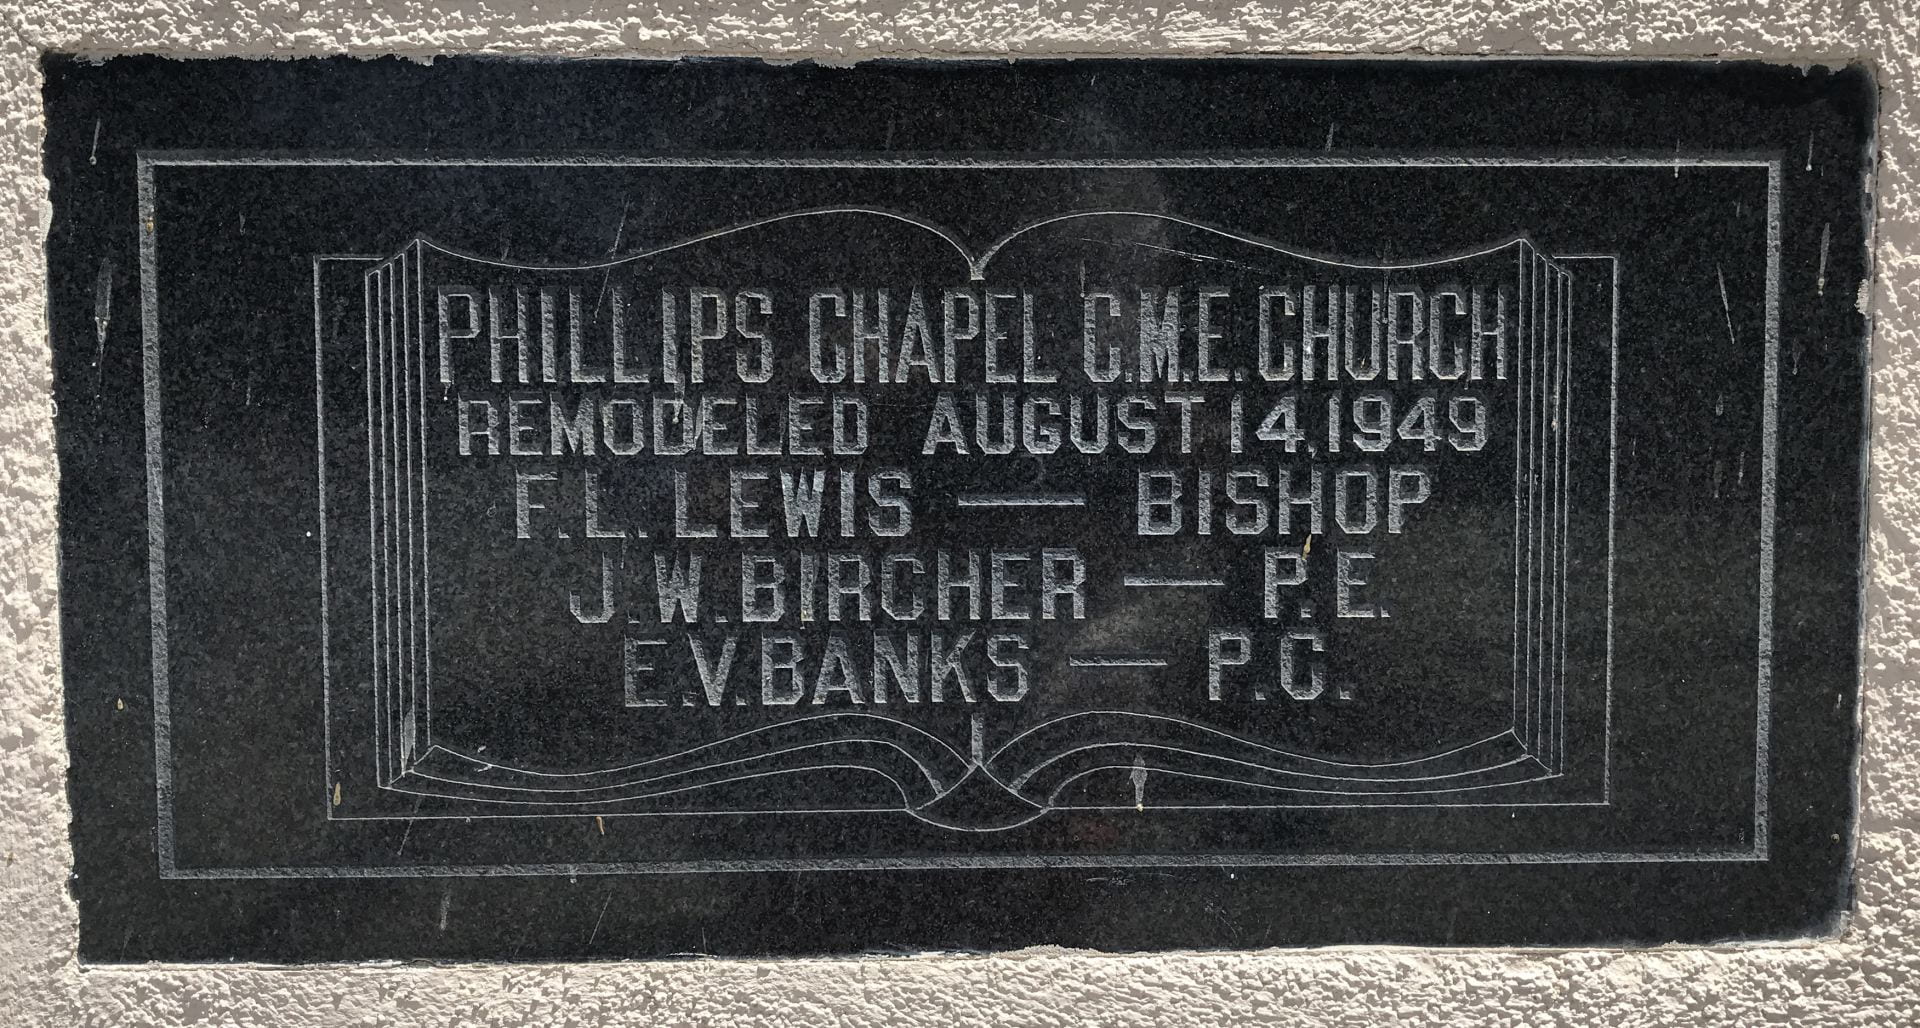 Close-up of a plaque on Phillips Chapel C.M.E. Church in Santa Monica.